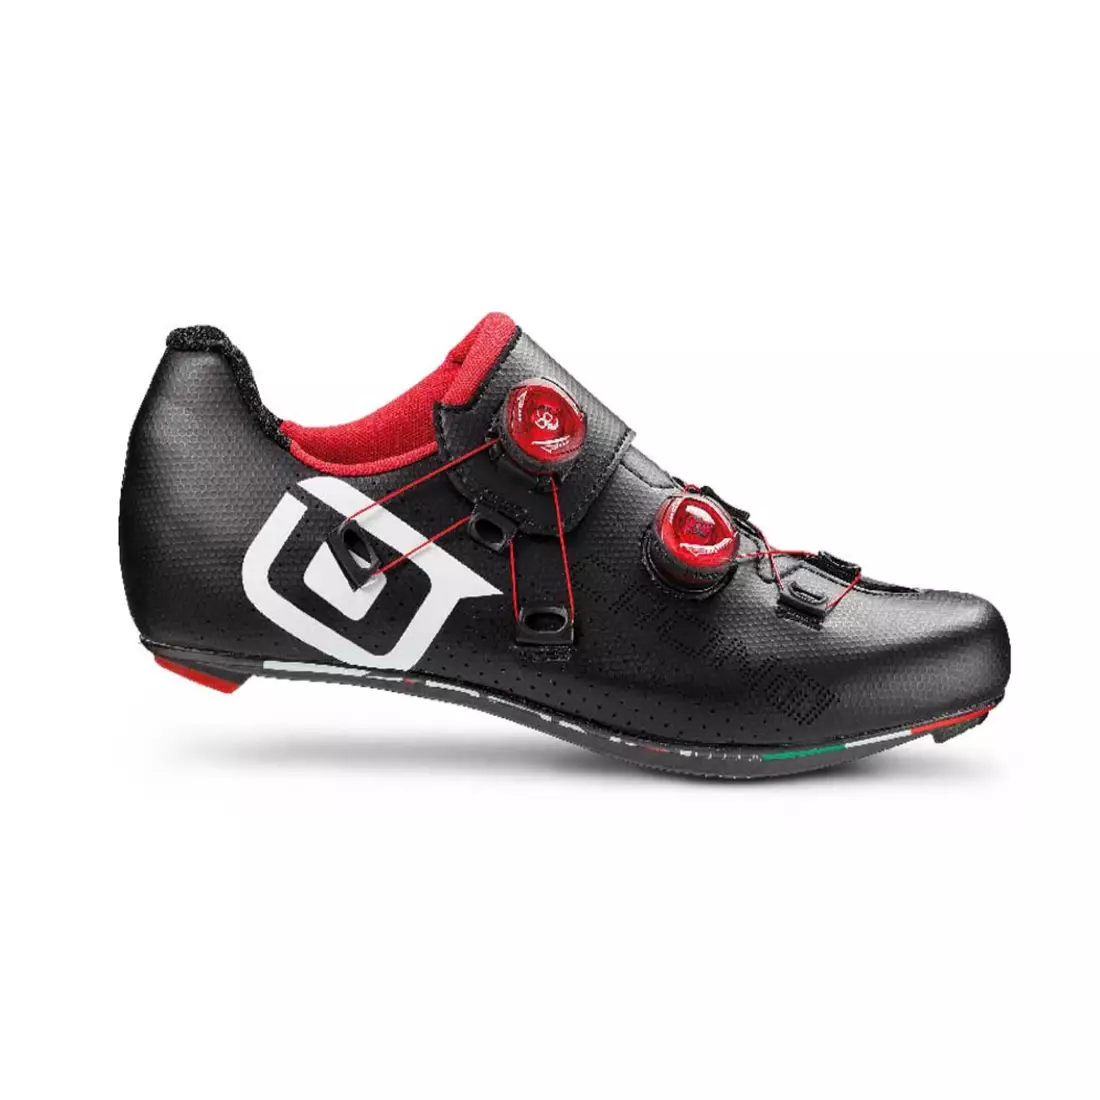 CRONO CR-1 Road bike shoes, carbon, black